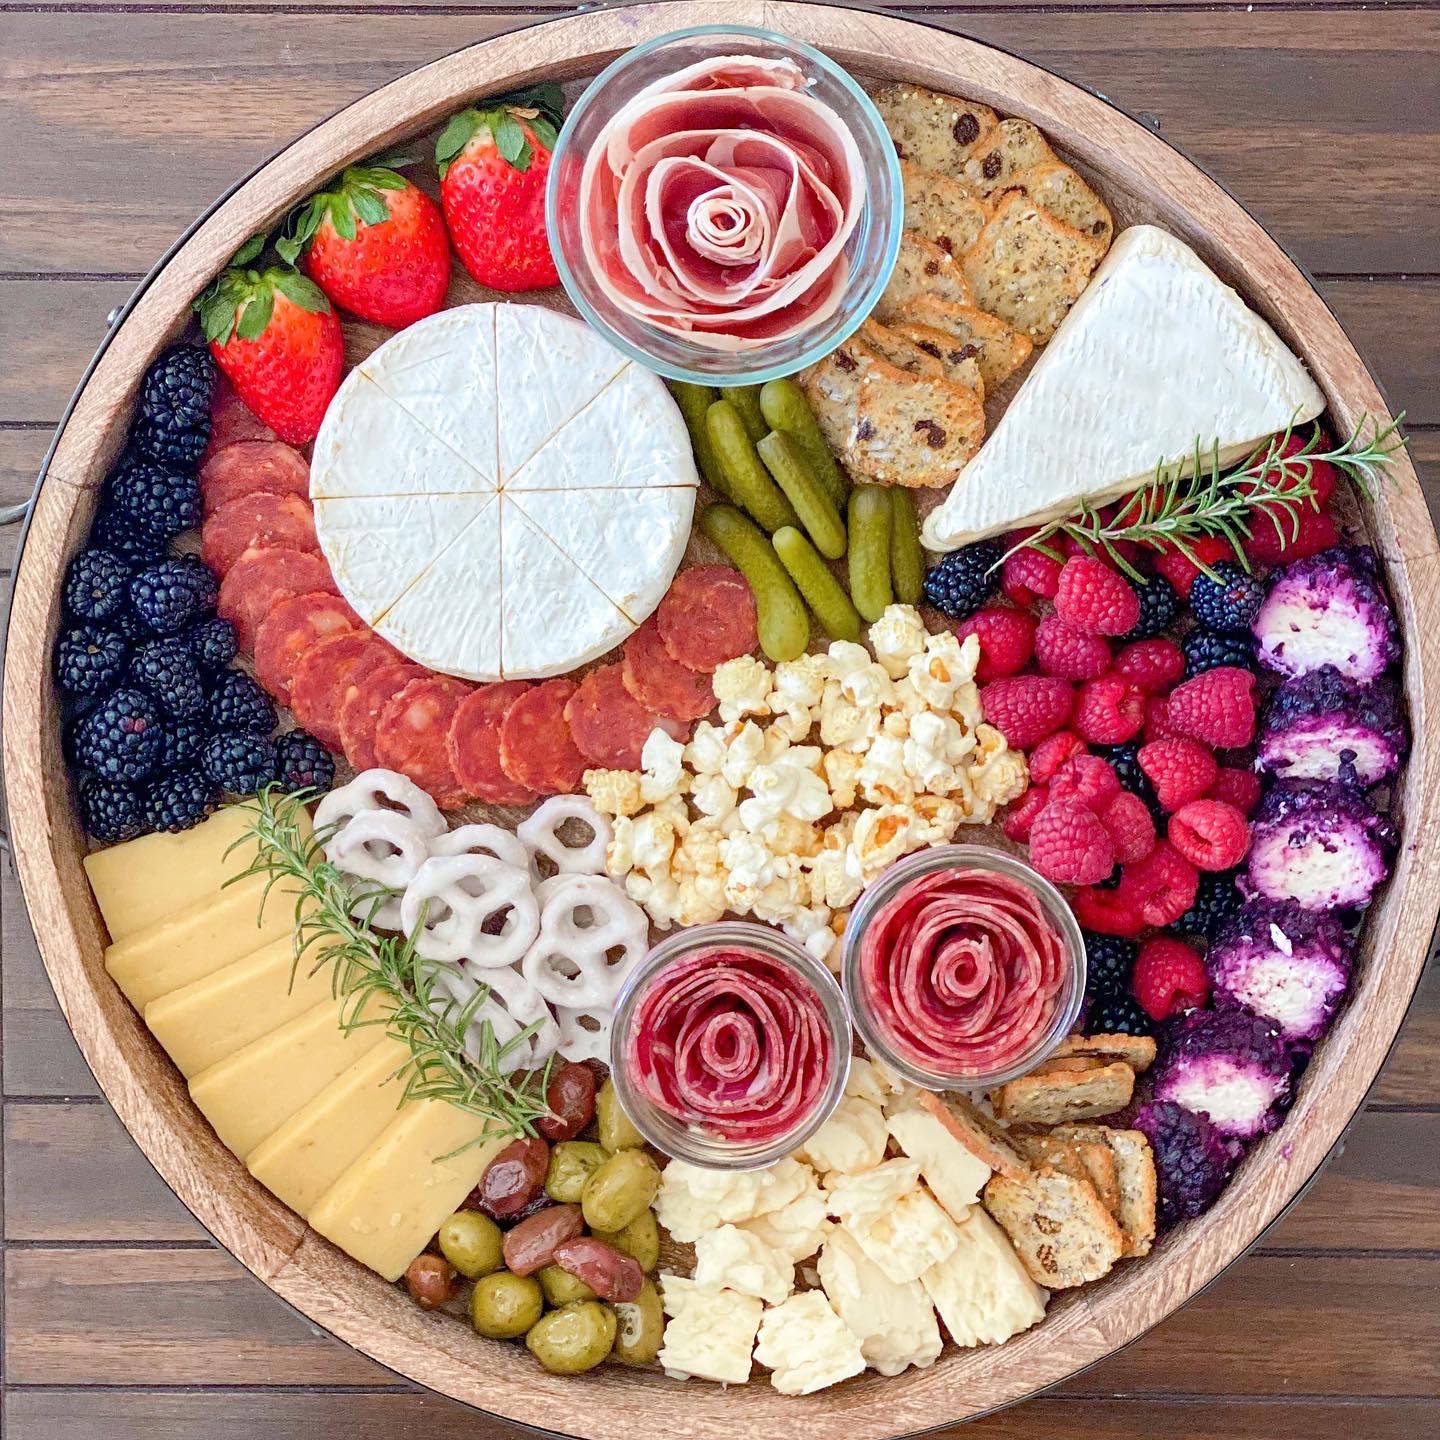 My Favorite Cheese Board Things